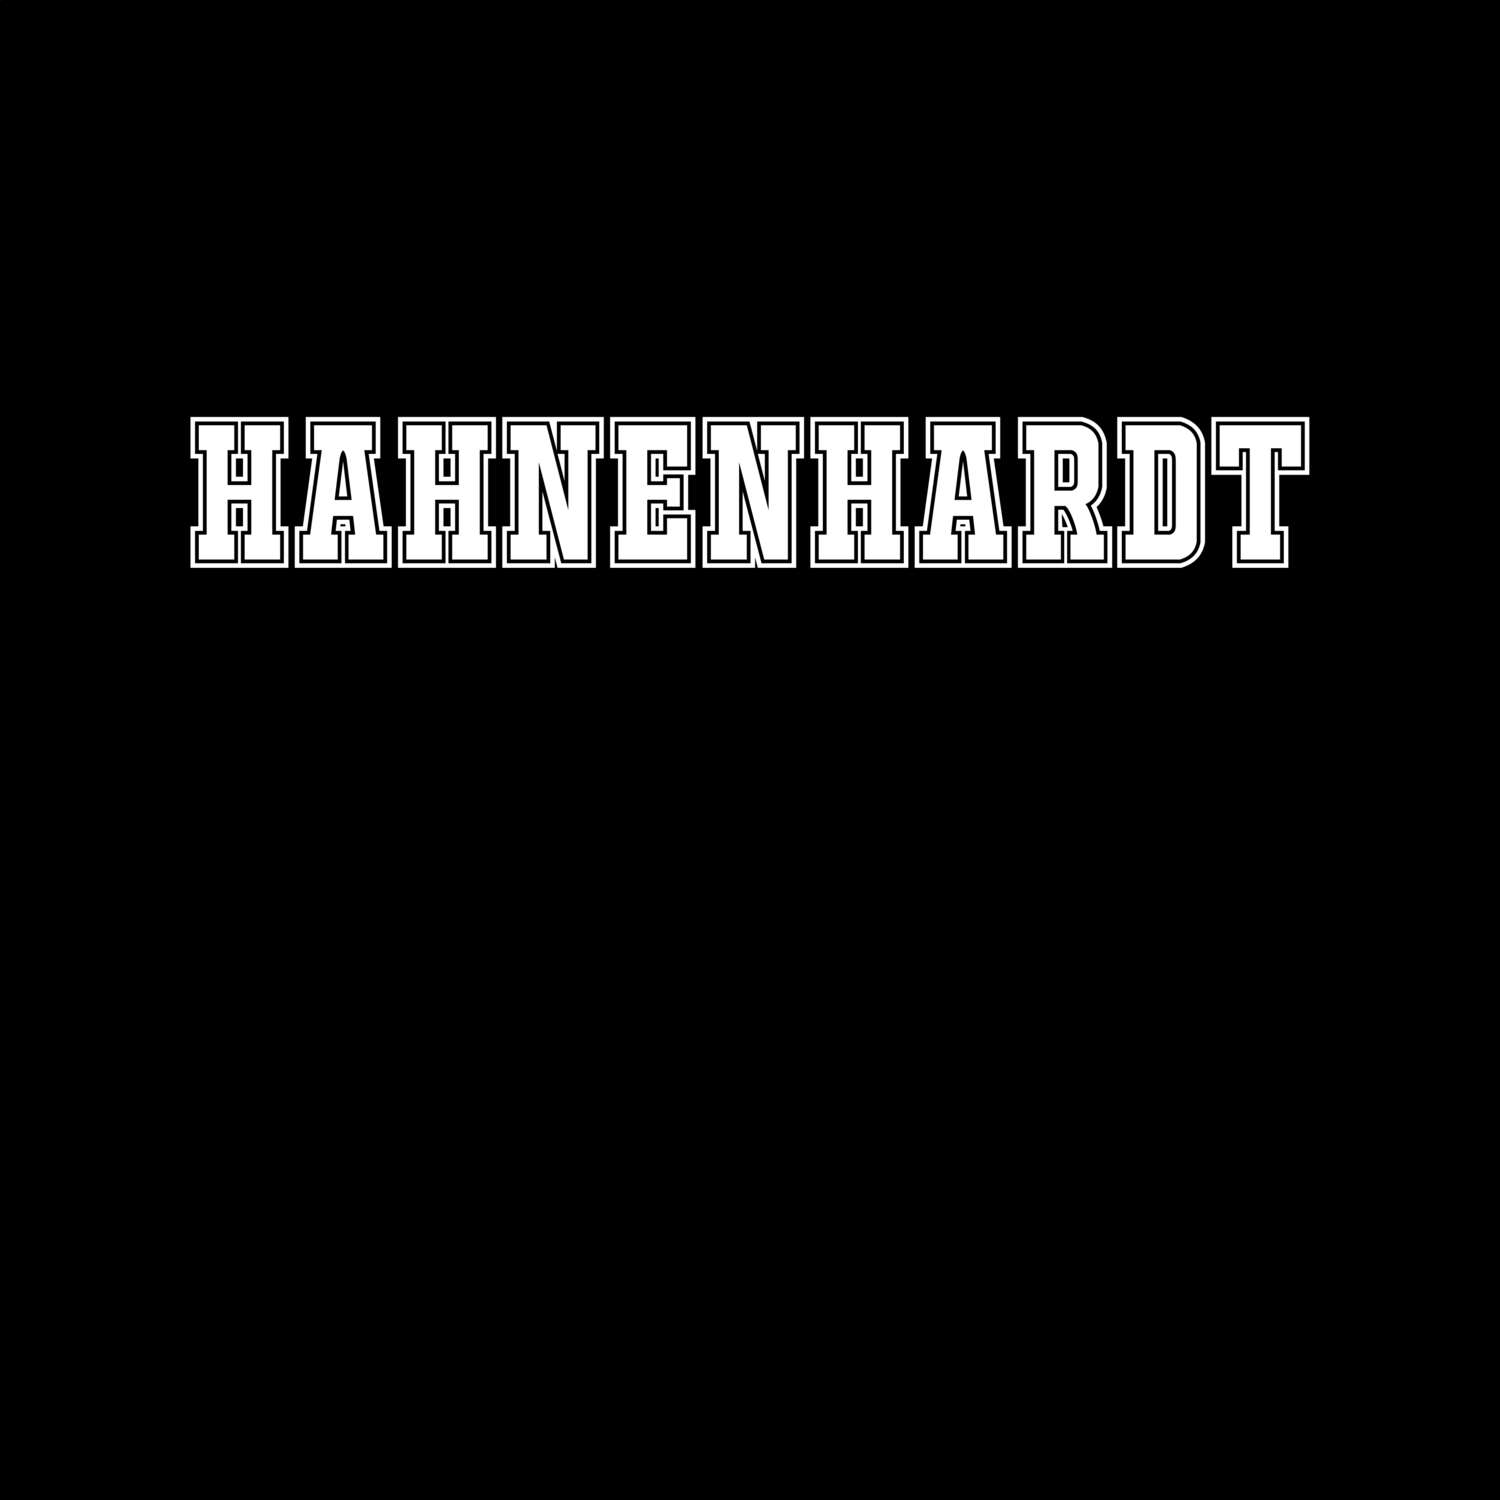 Hahnenhardt T-Shirt »Classic«